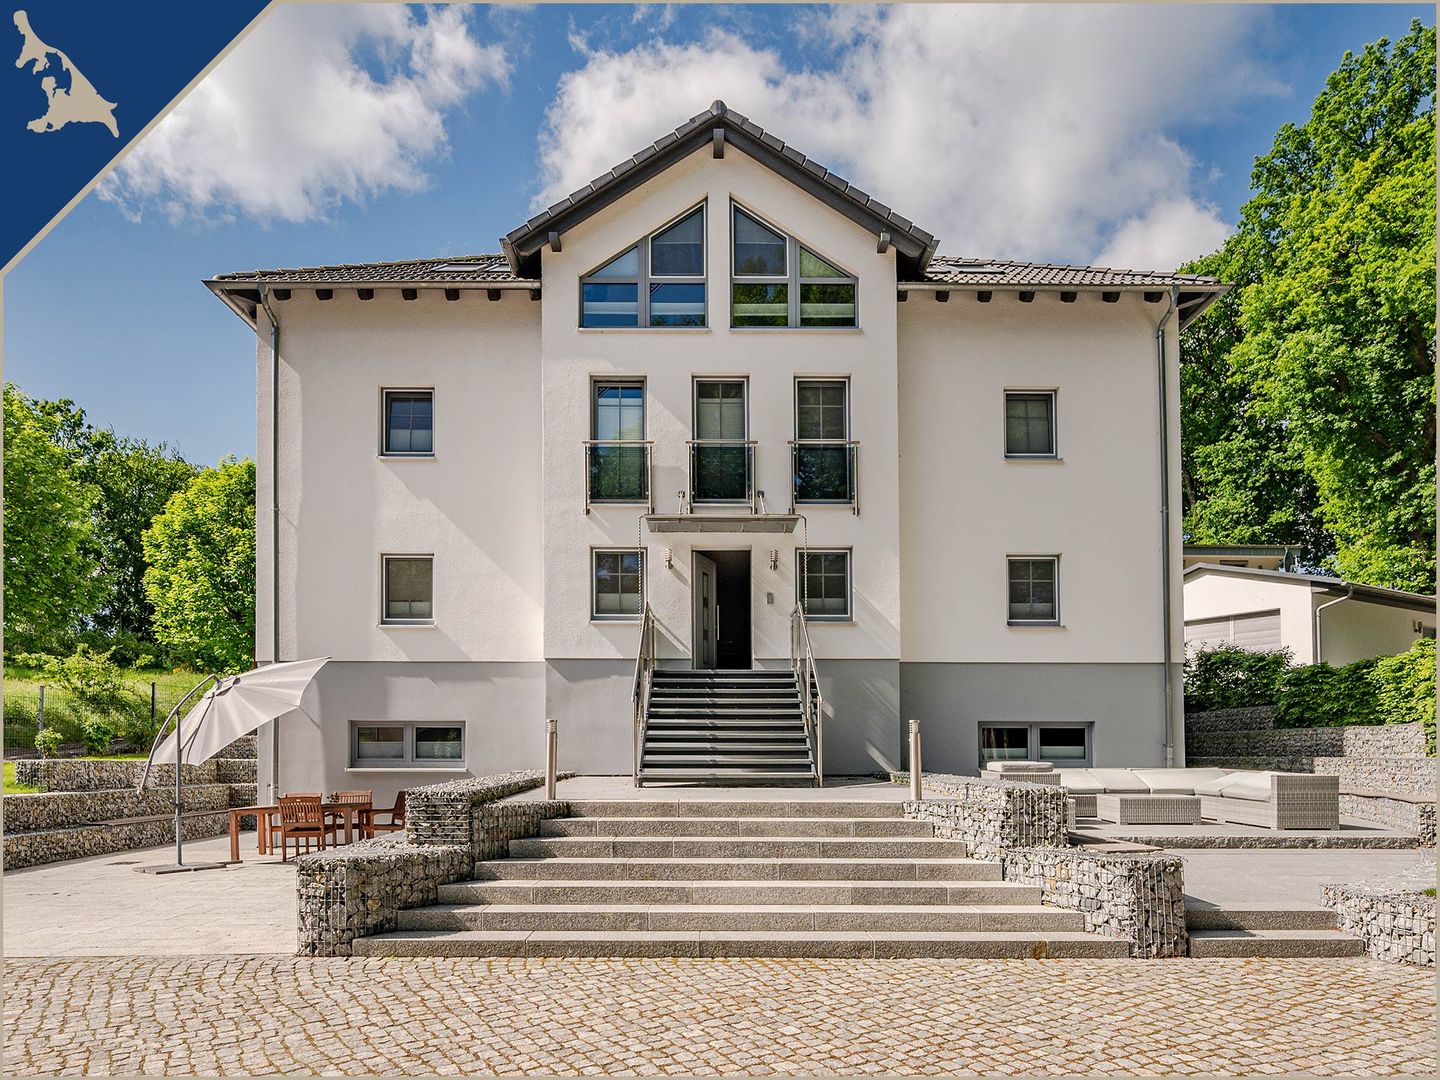 Villa Doris Whg 1 Merilyn  in Mecklenburg Vorpommern